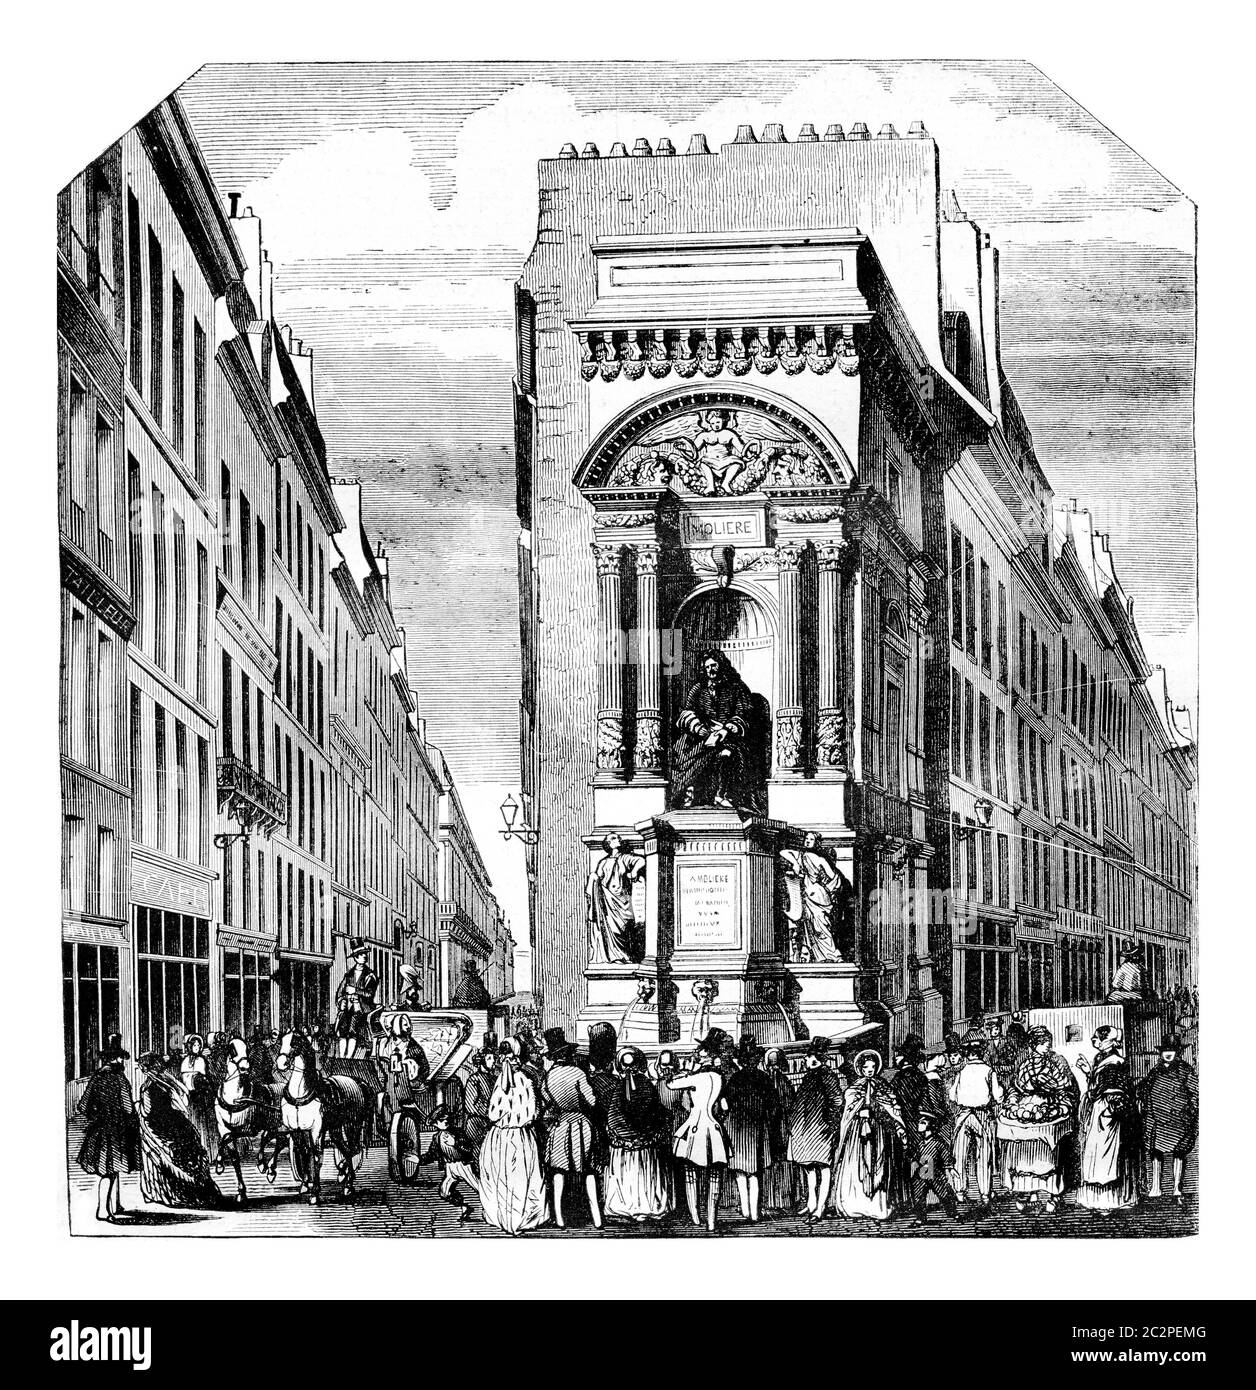 Fontaine Moliere at Richelieu, Paris, vintage engraved illustration. Magasin Pittoresque 1844. Stock Photo